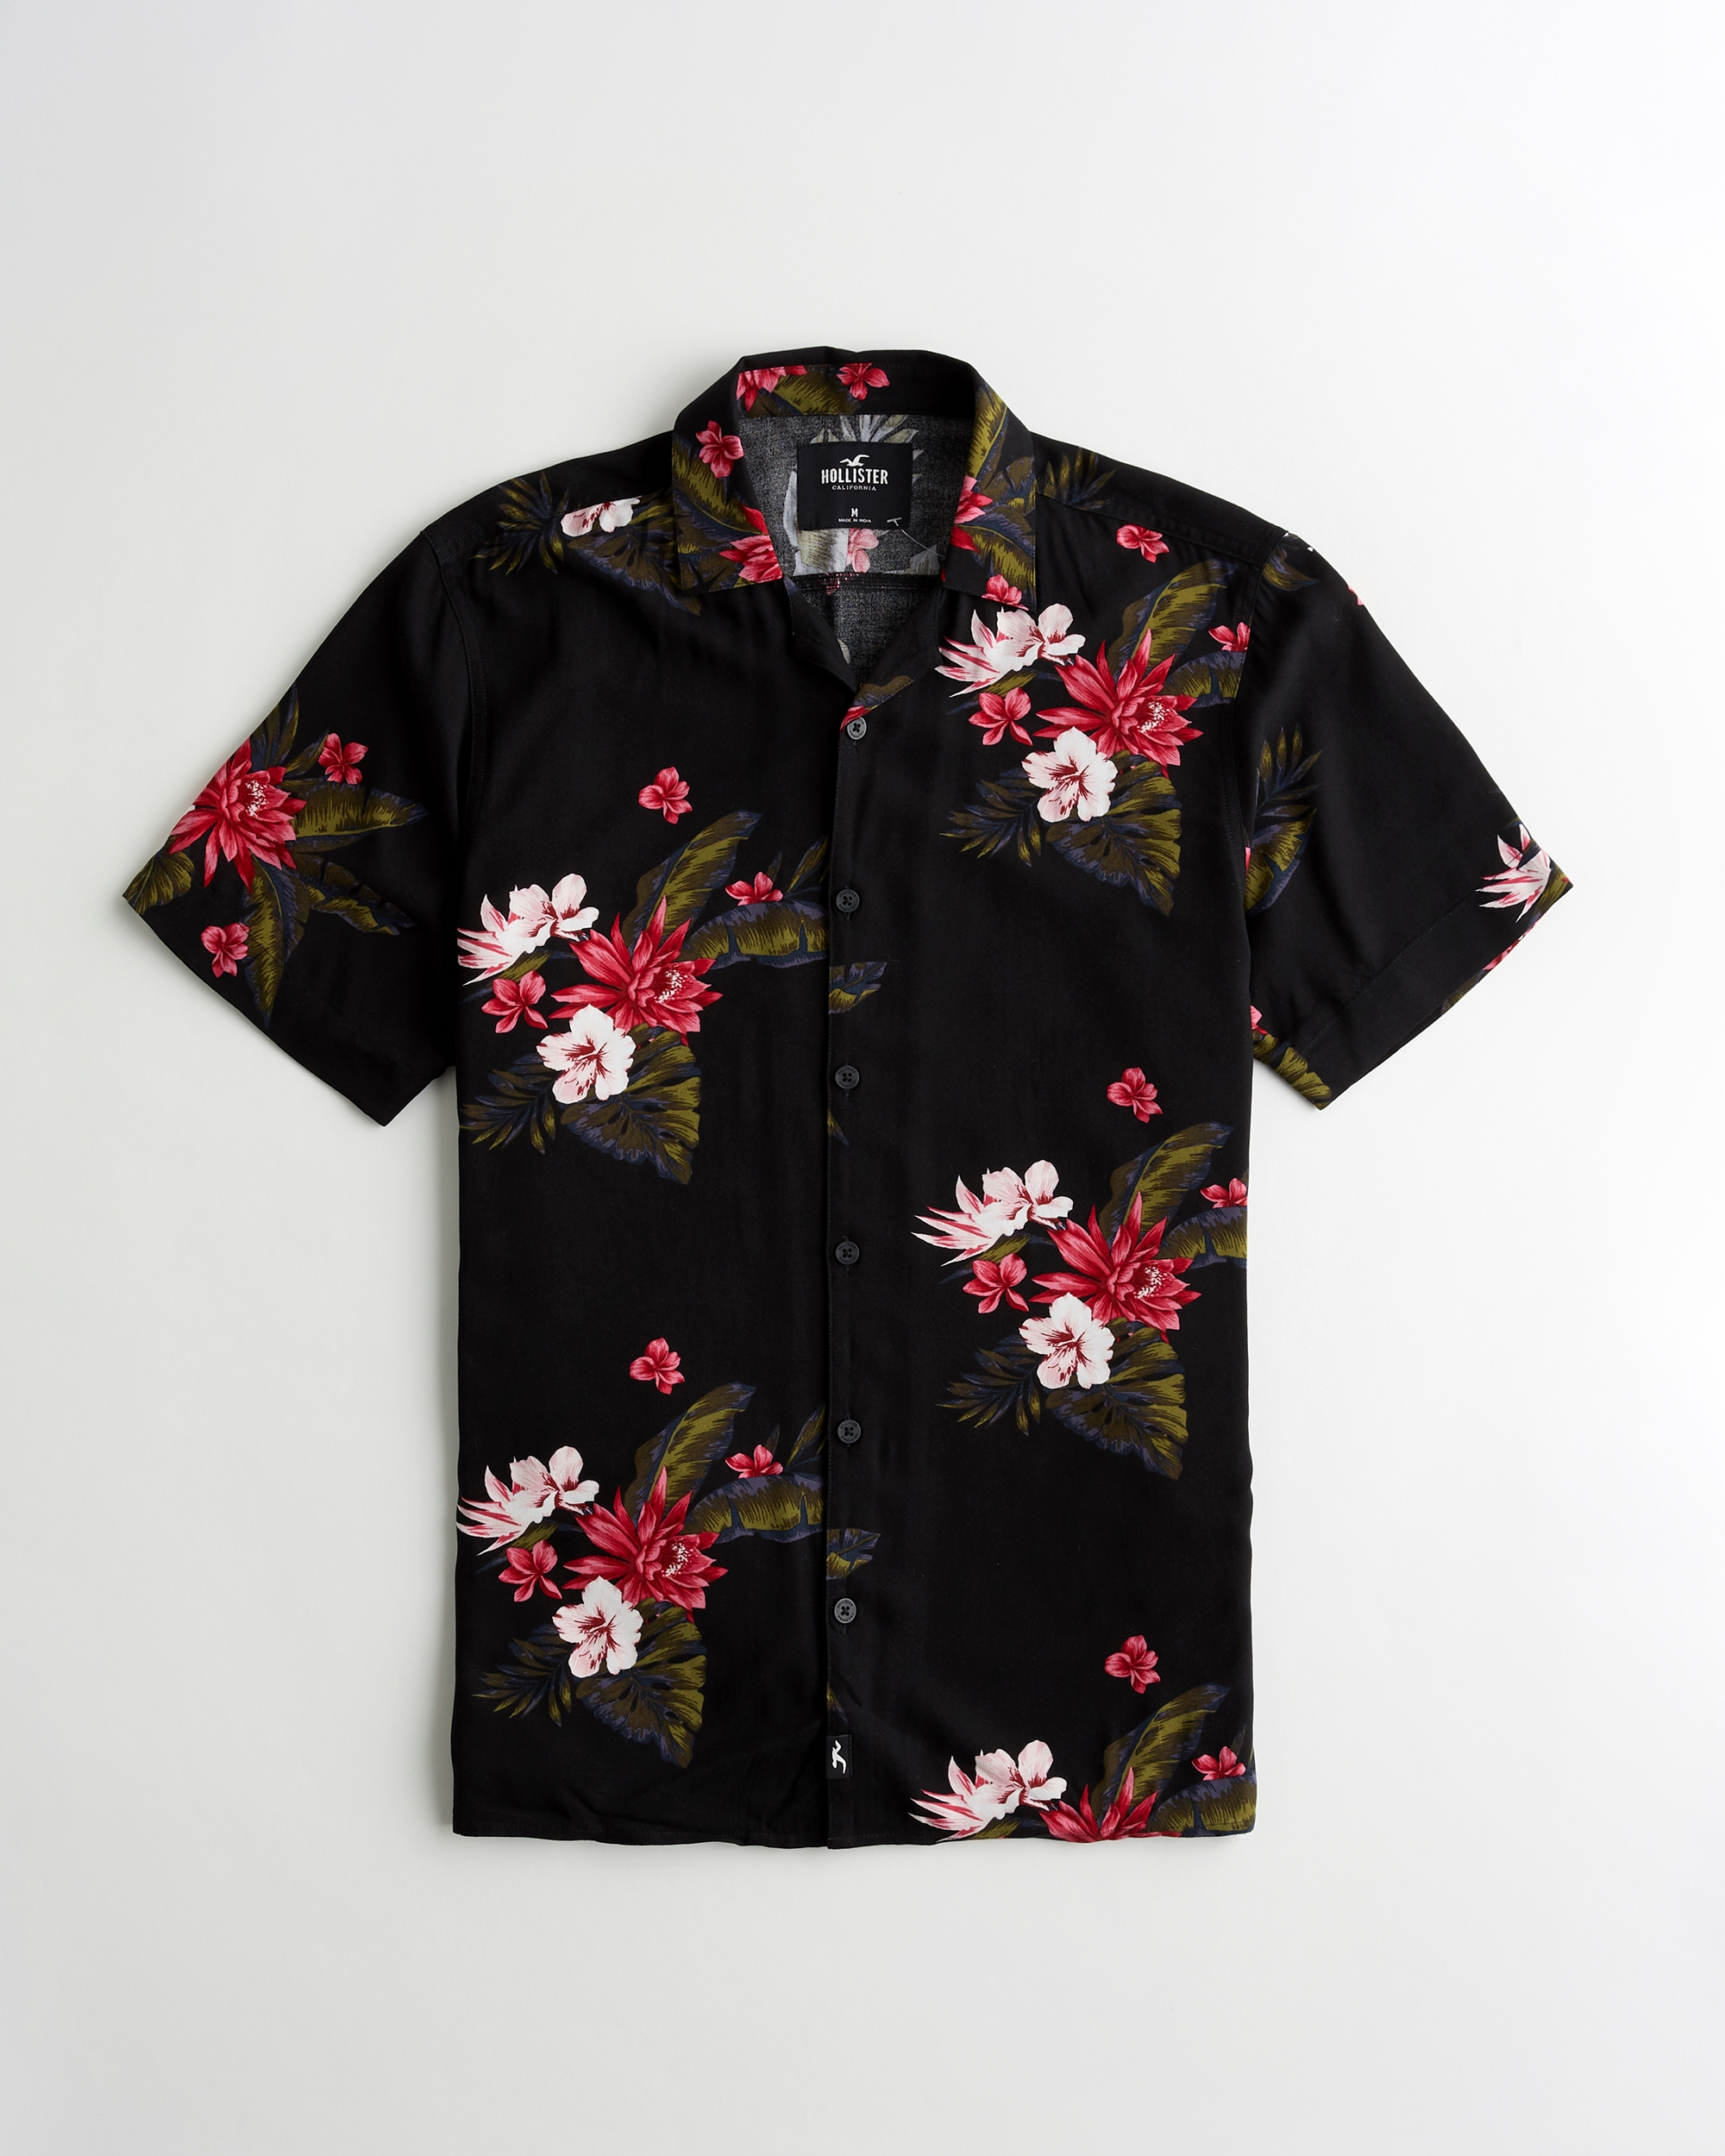 hollister shirts online shopping